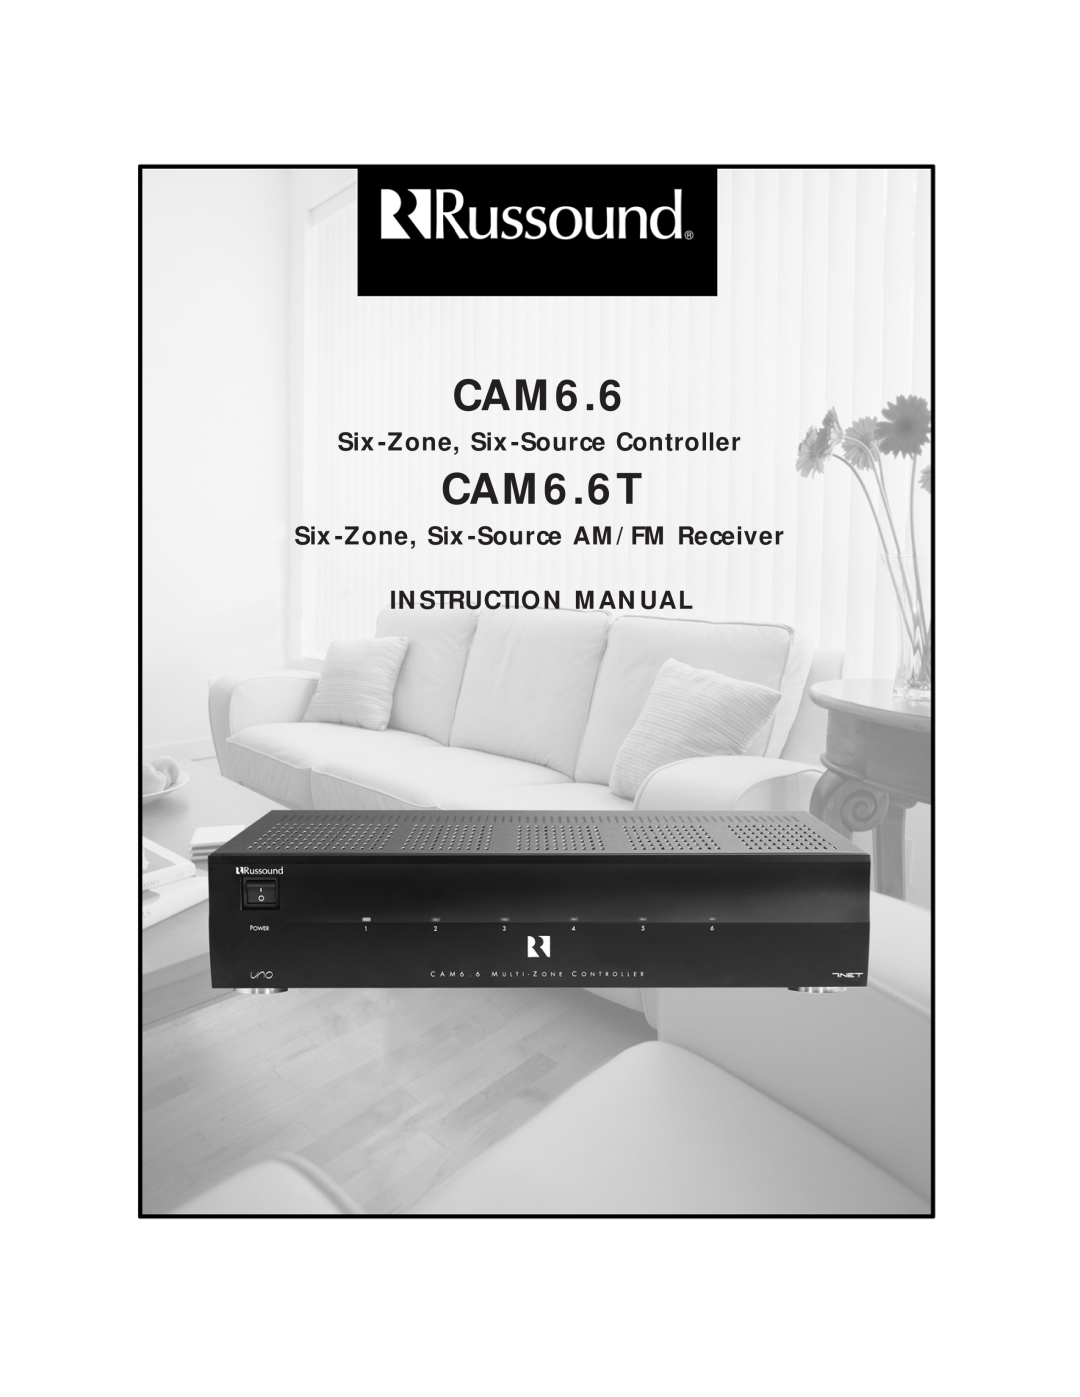 Russound instruction manual CAM6.6T, Six-Zone, Six-SourceController, Six-Zone, Six-SourceAM/FM Receiver 